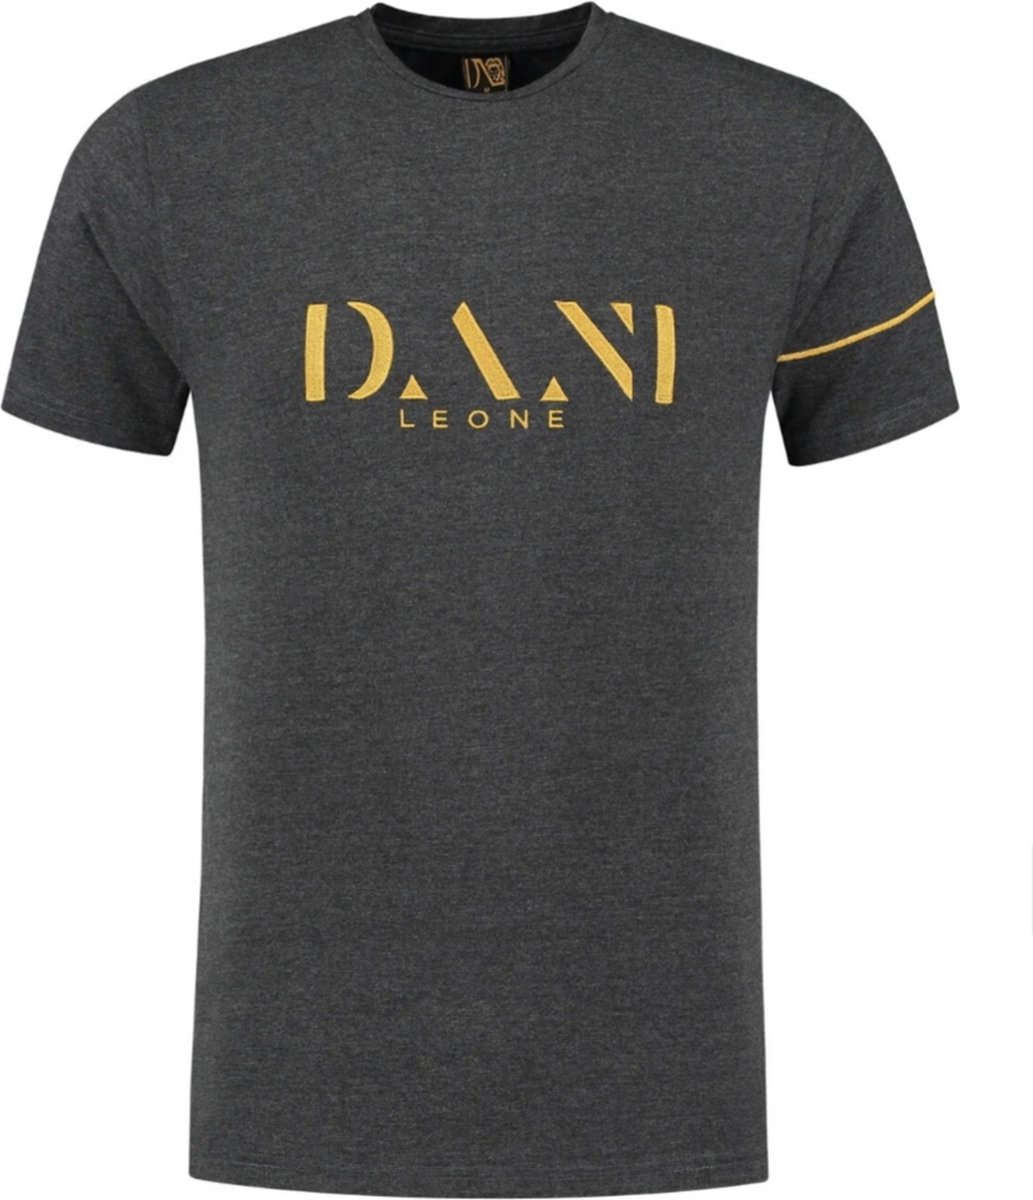 Dani leone t-shirt gold edition (S) grey